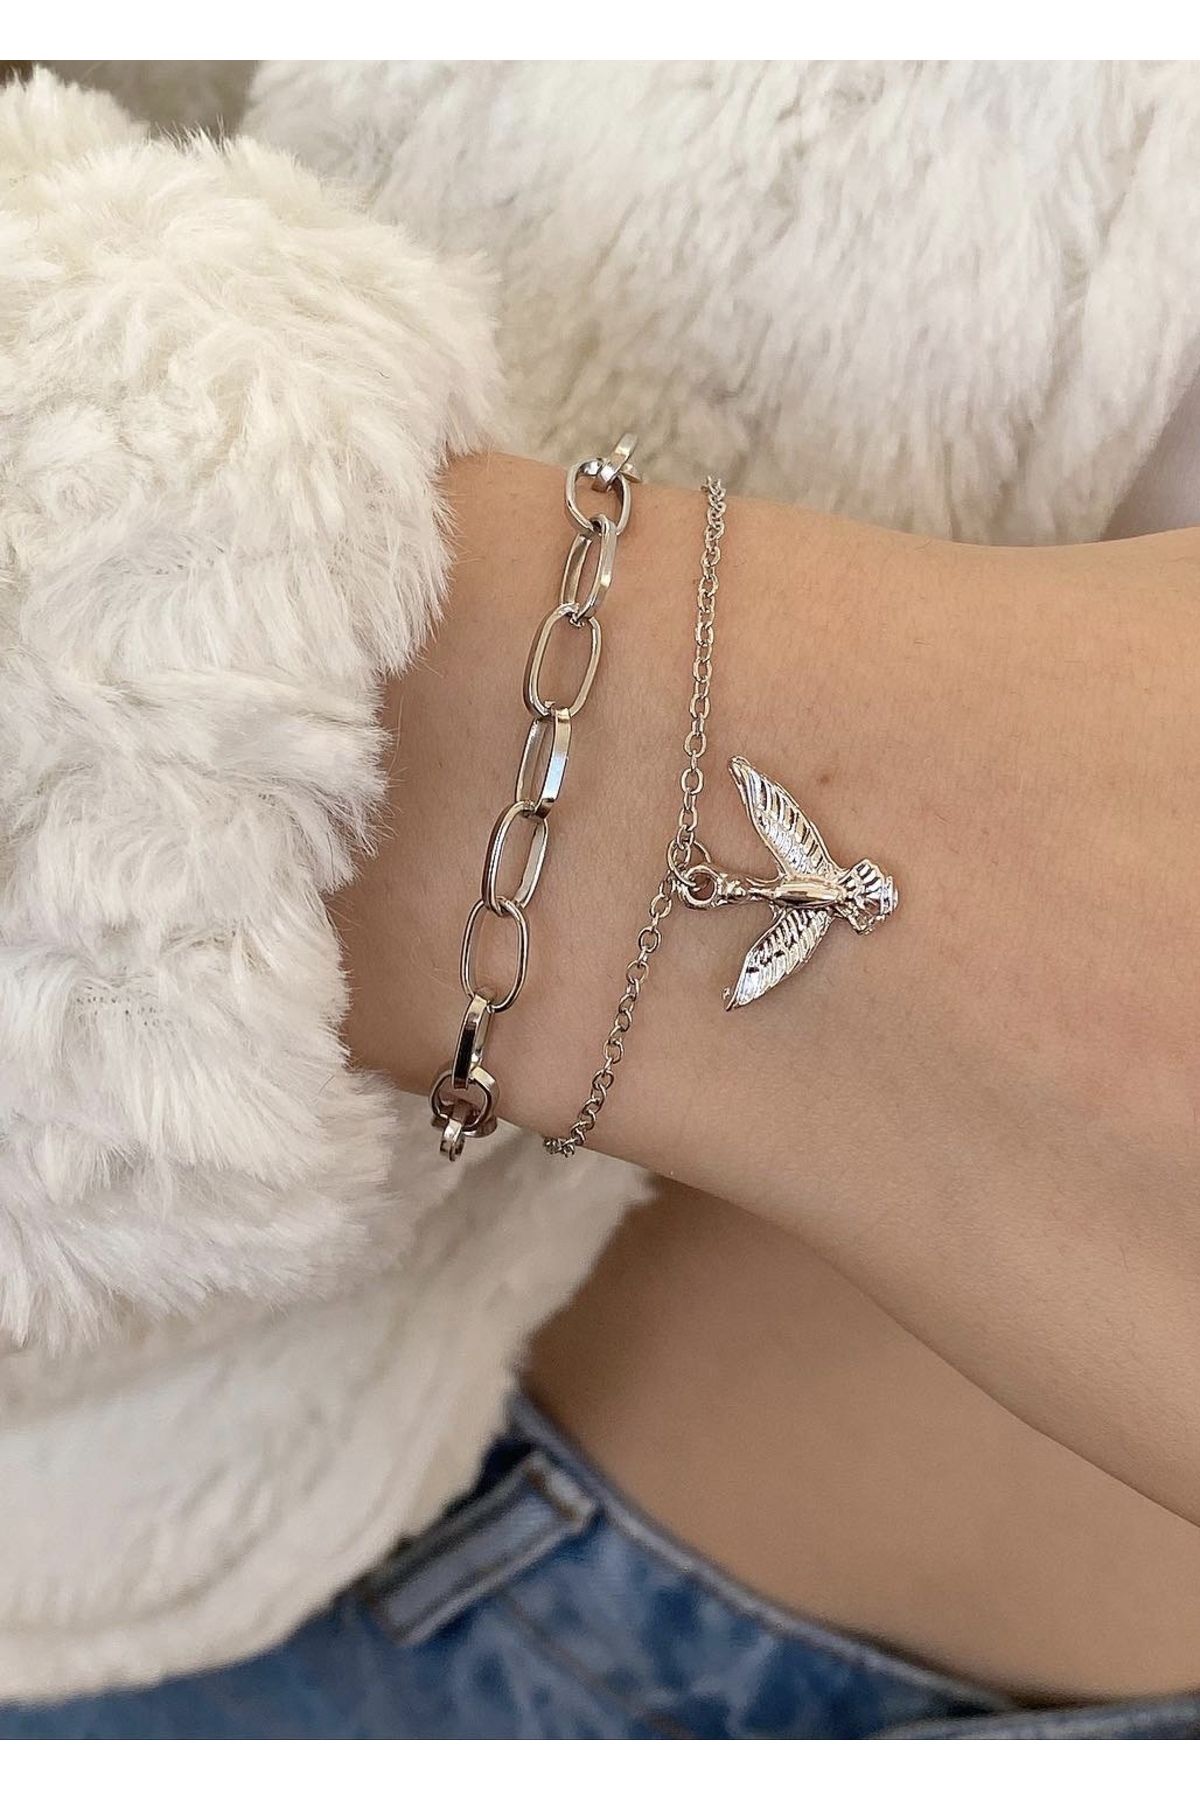 Albatross bird necklace, bird jewelry, freedom symbol pendant, hope symbol  pendant, sterling silver hand carved summer time… | Bird necklace, Bird  jewelry, Necklace